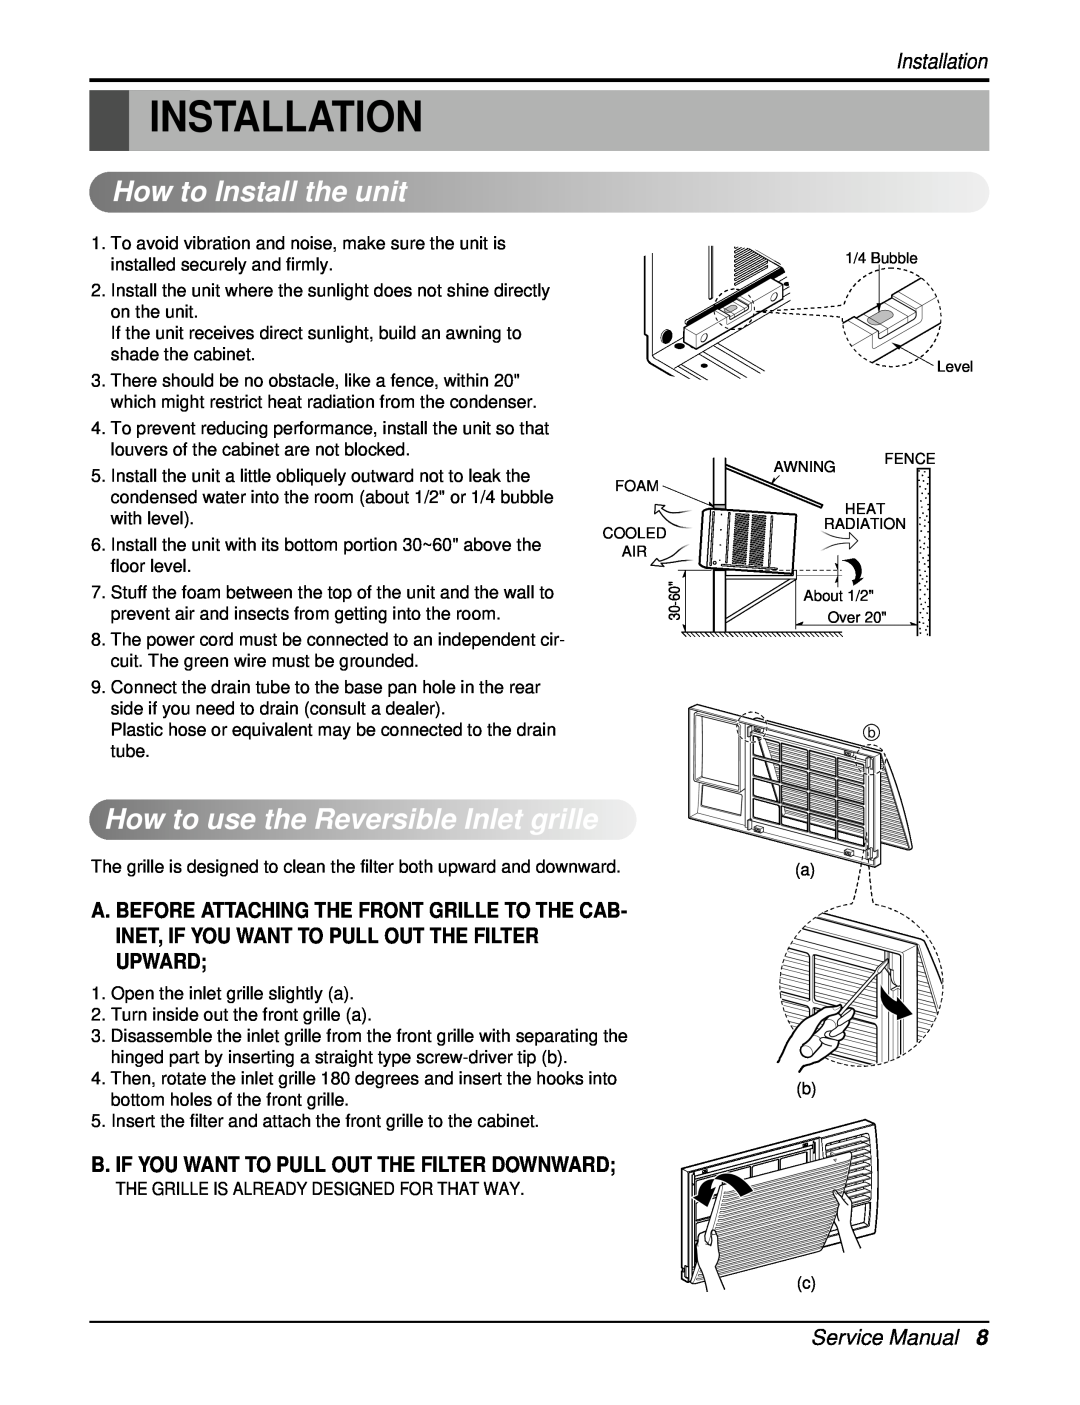 Heat Controller REG-183A, REG-243A manual Installation, HowtoInstalltheunit, HowtousetheReversibleInletgrille 